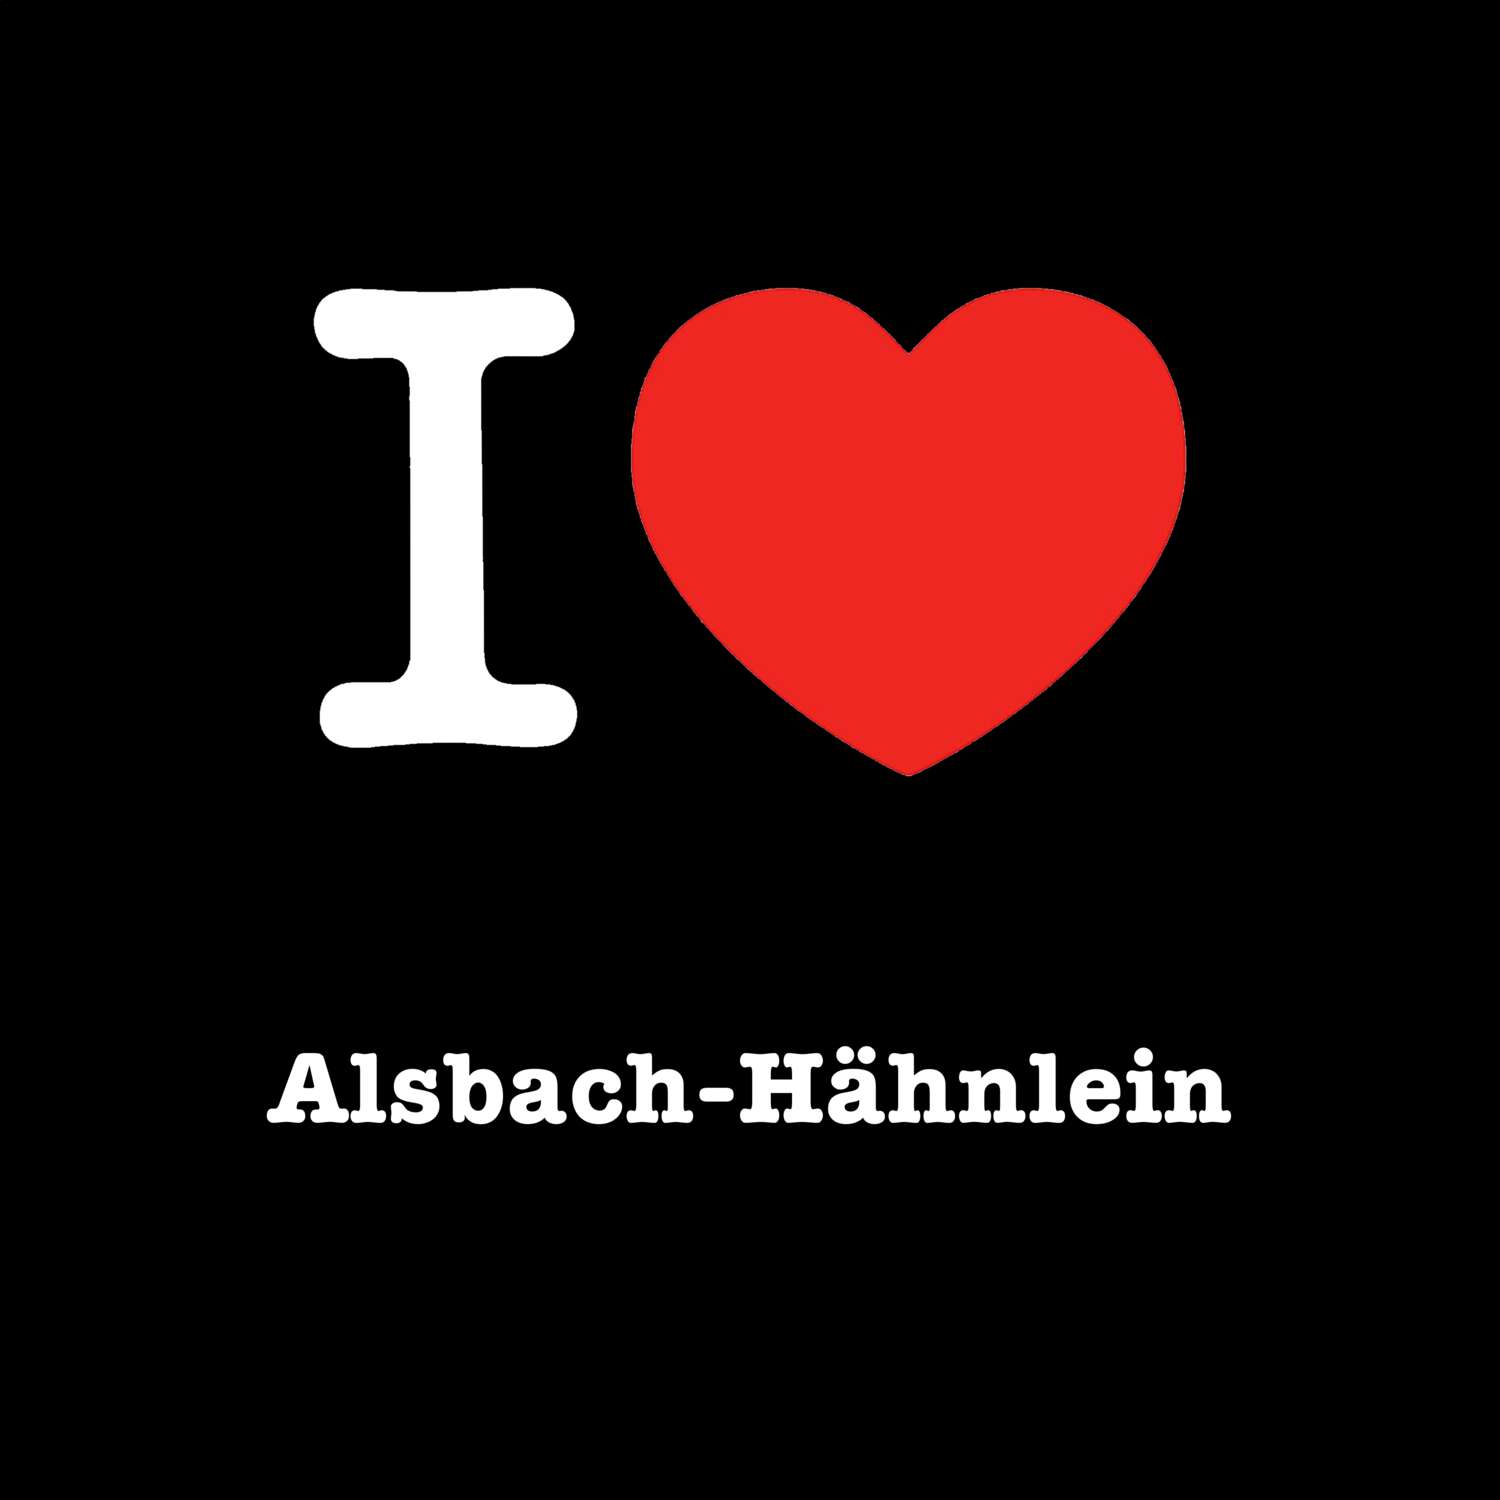 Alsbach-Hähnlein T-Shirt »I love«